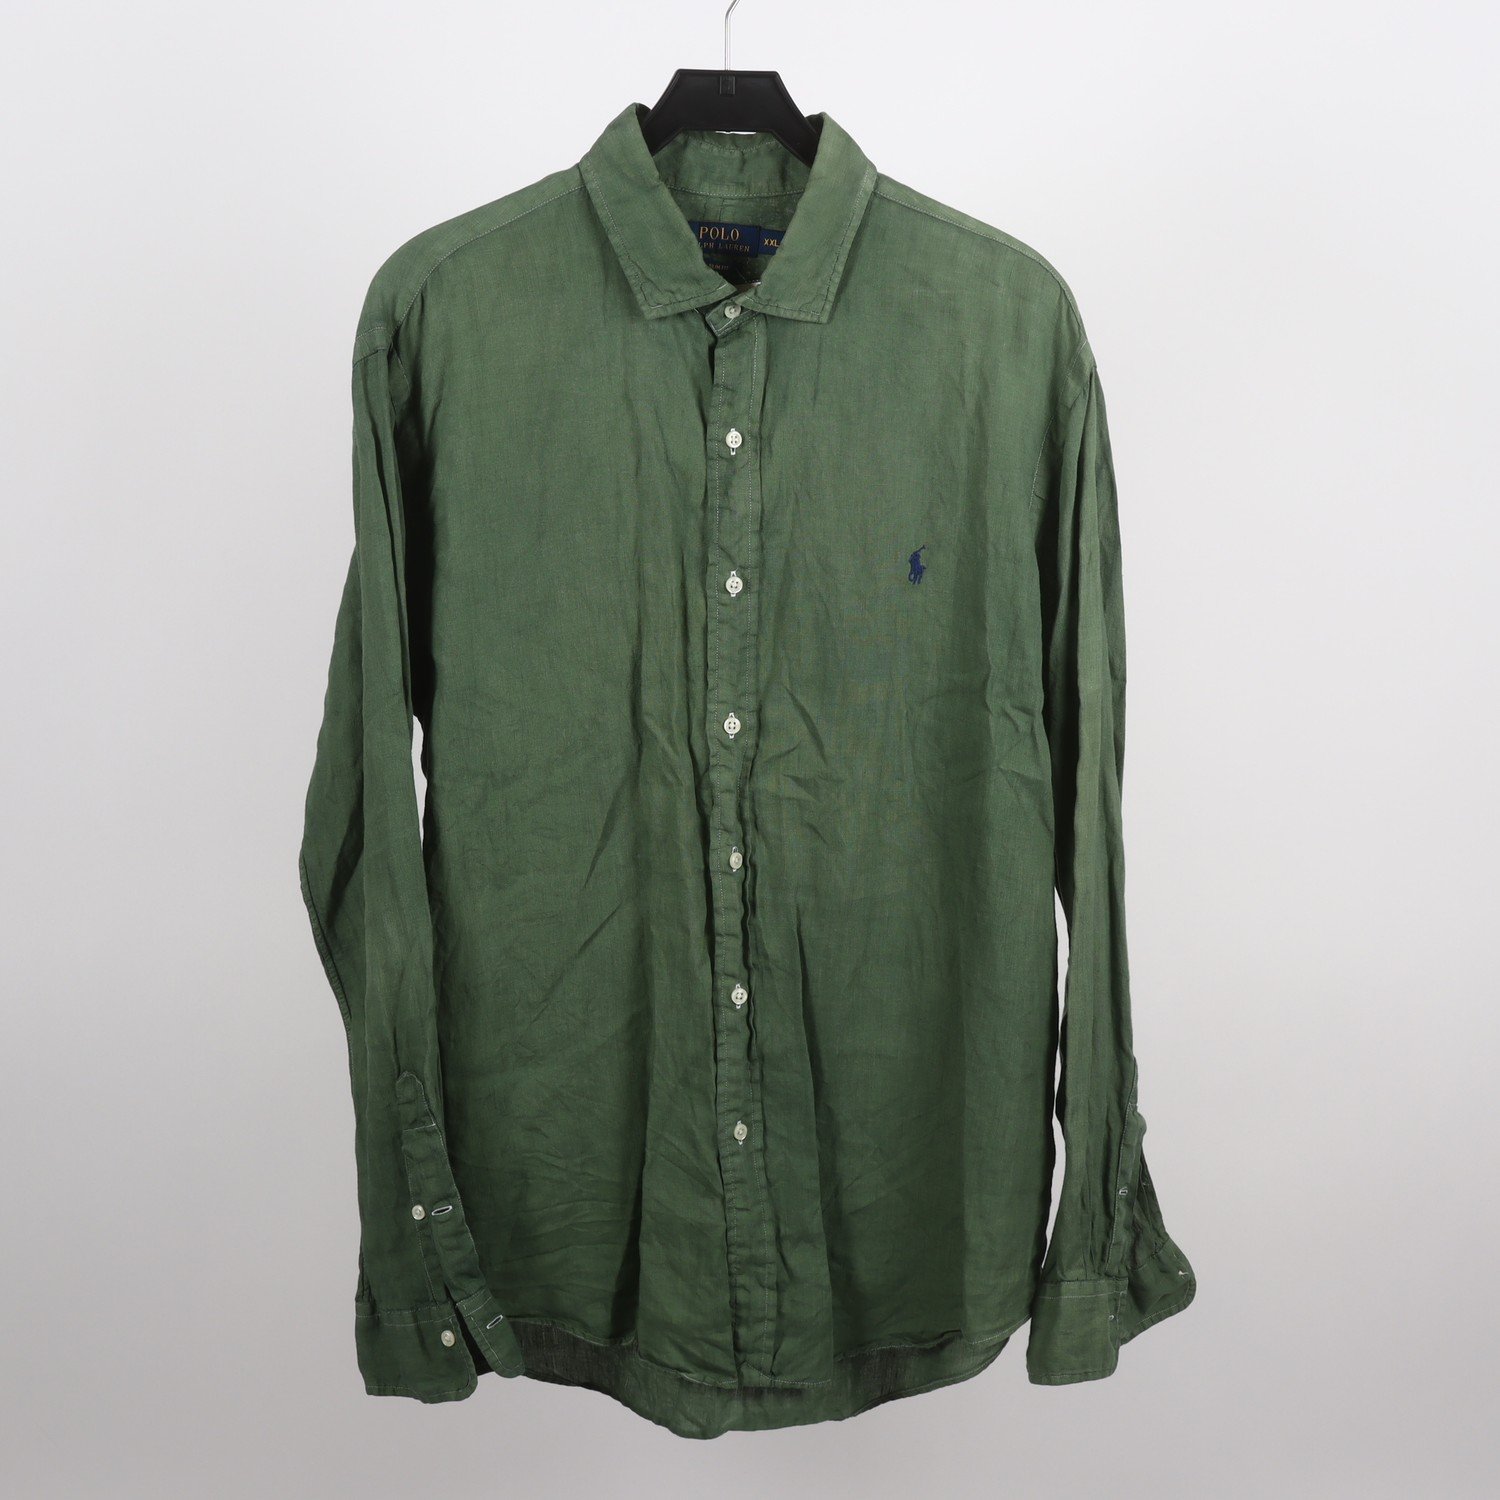 Skjorta, Polo Ralph Lauren grön, 100% lin, stl. XXL